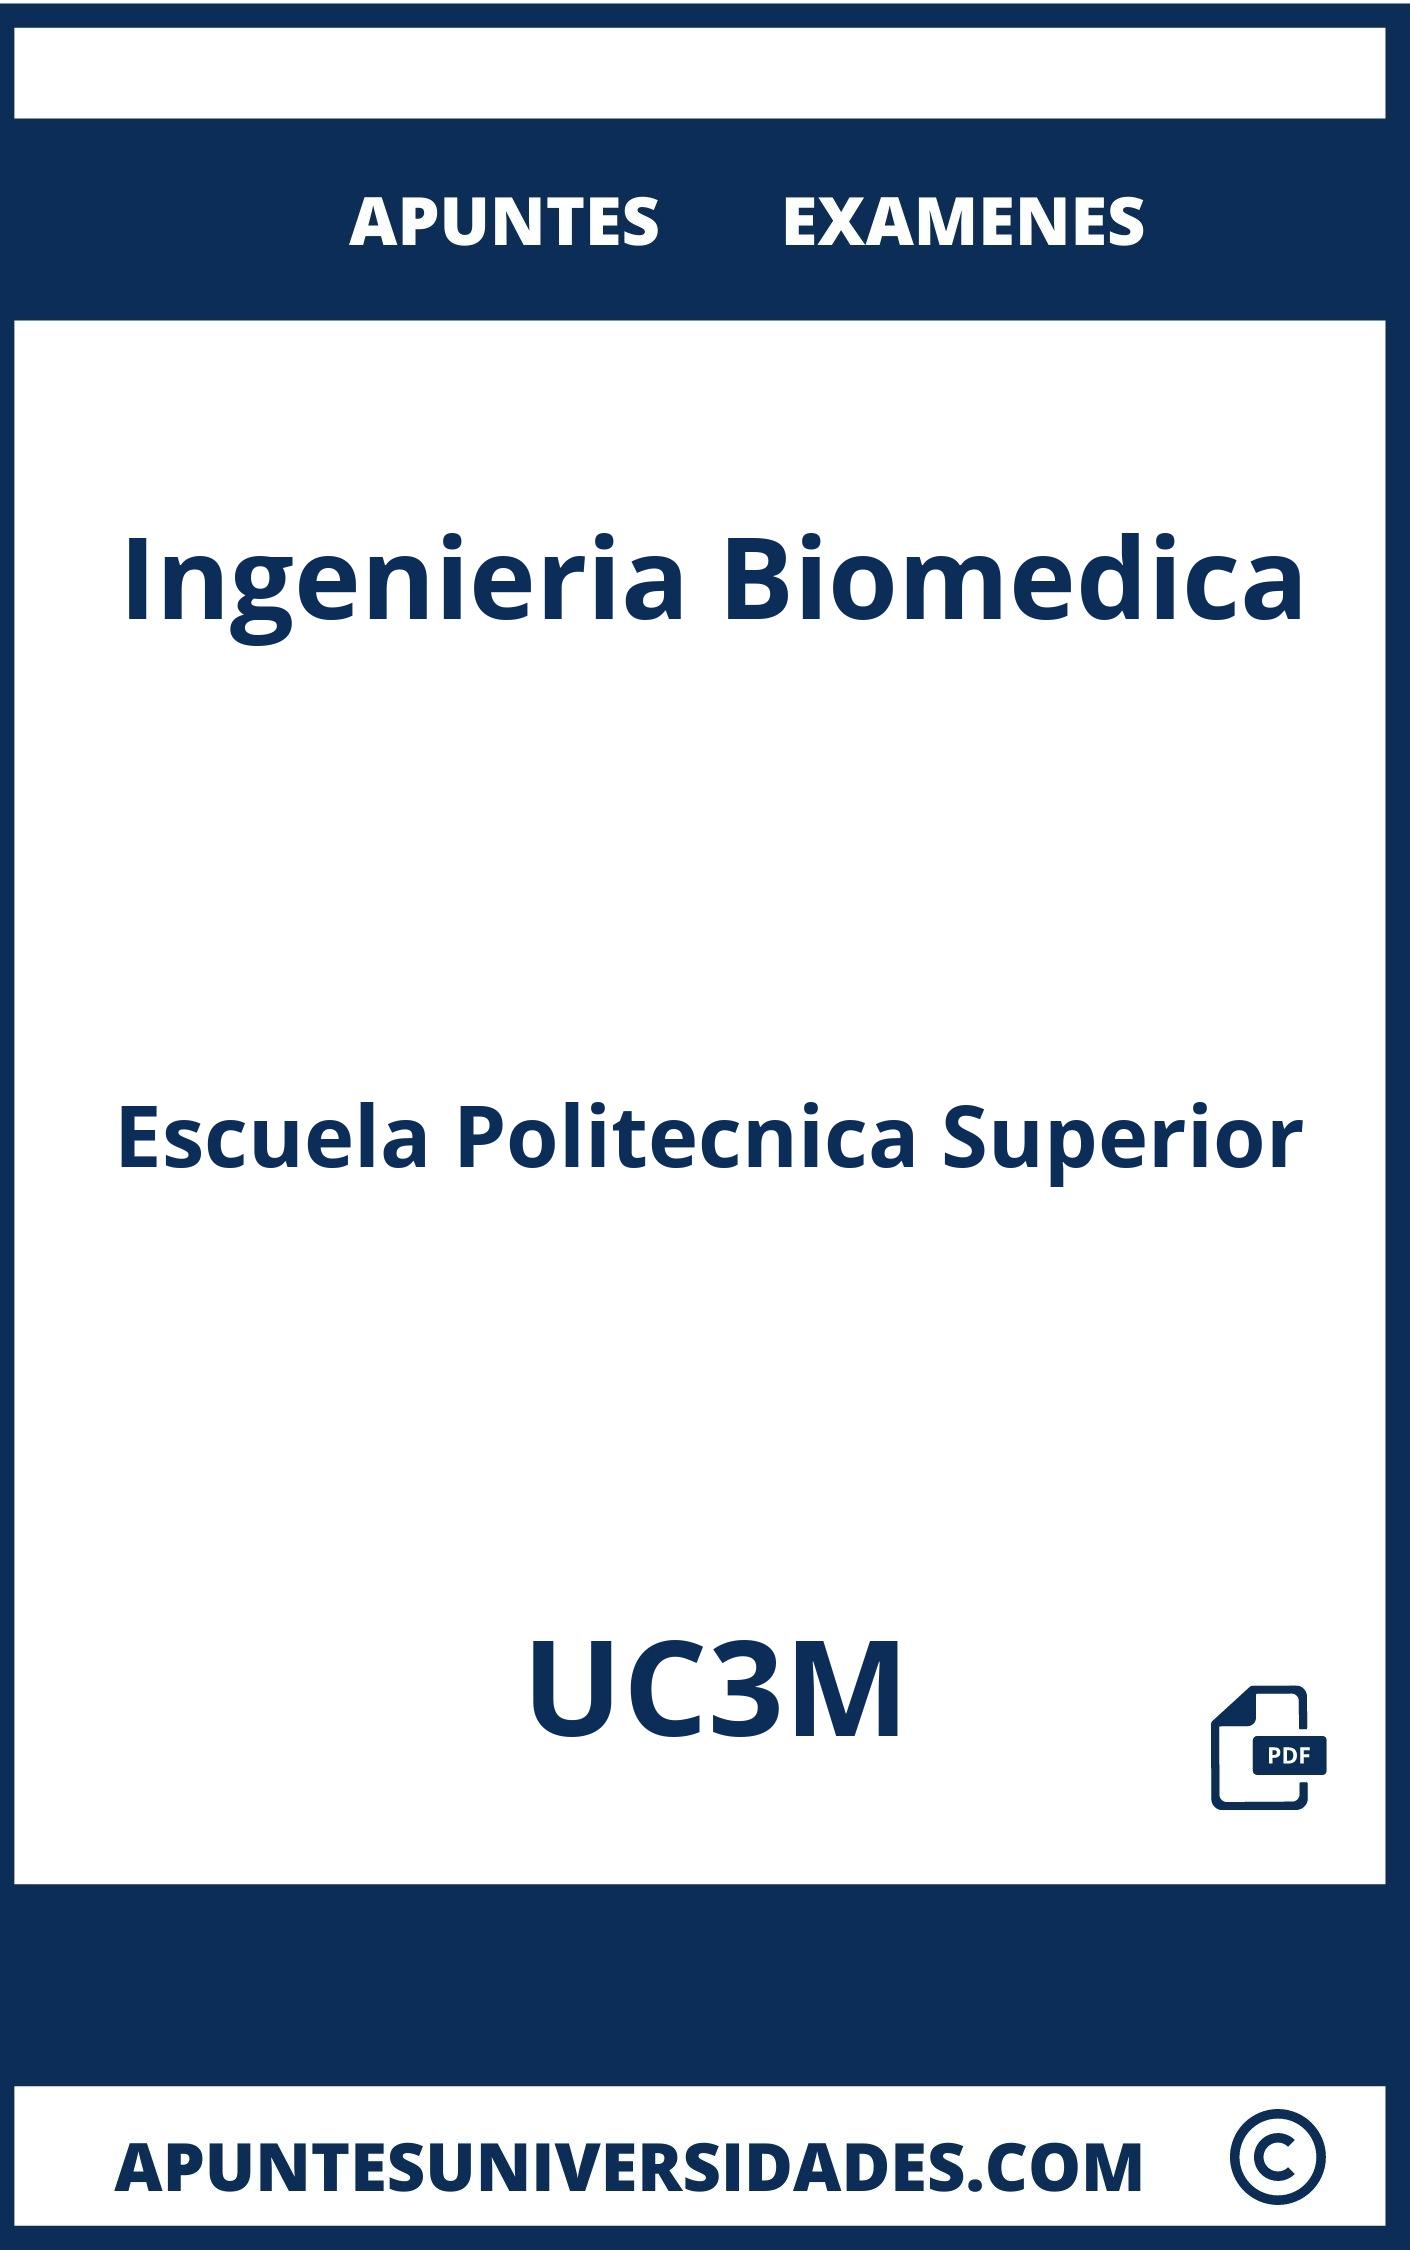 Examenes Ingenieria Biomedica UC3M y Apuntes